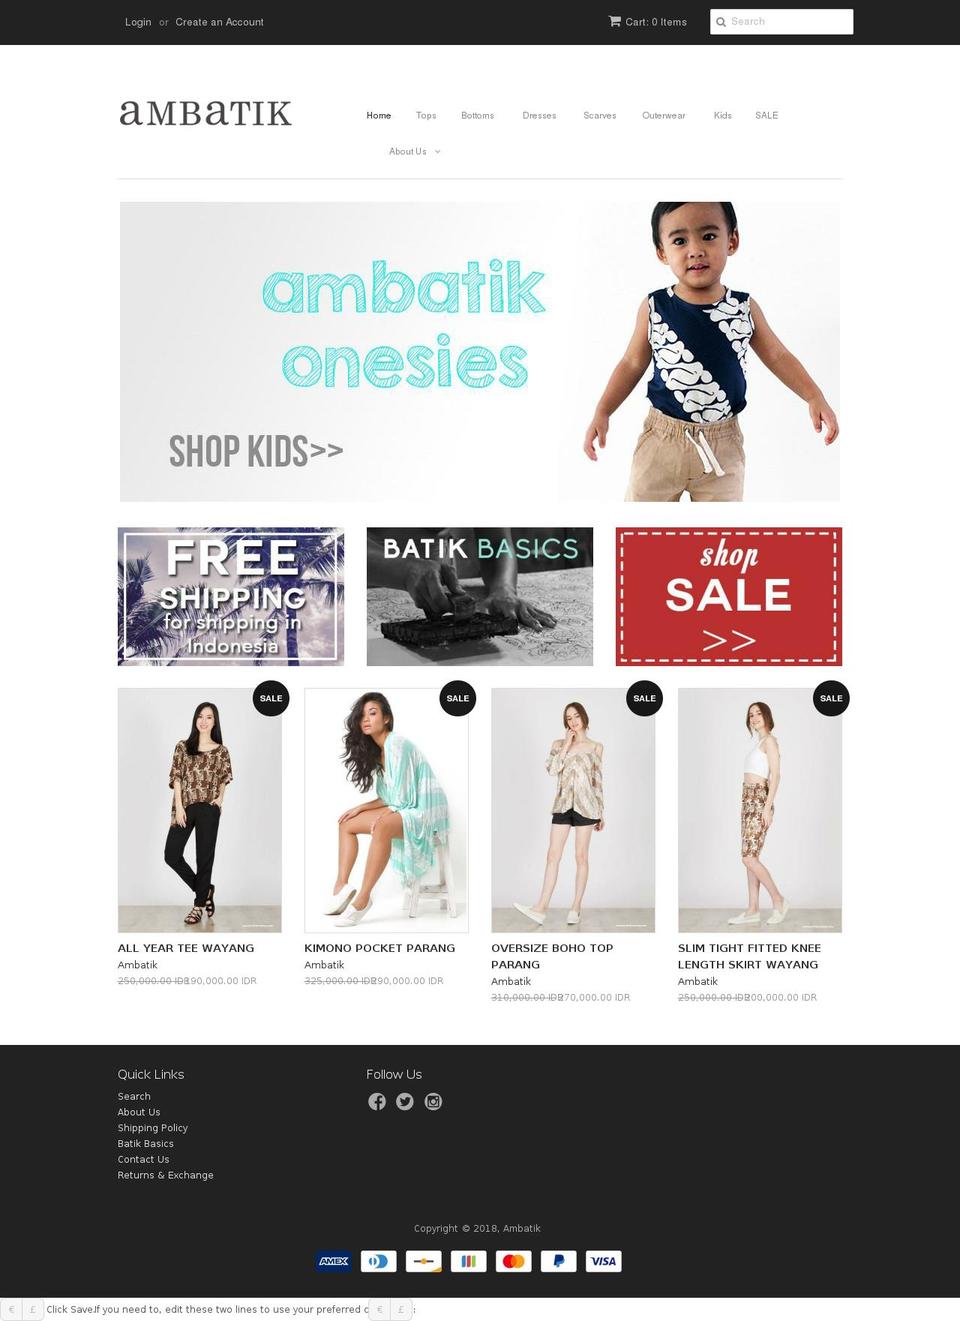 ambatik.co.id shopify website screenshot